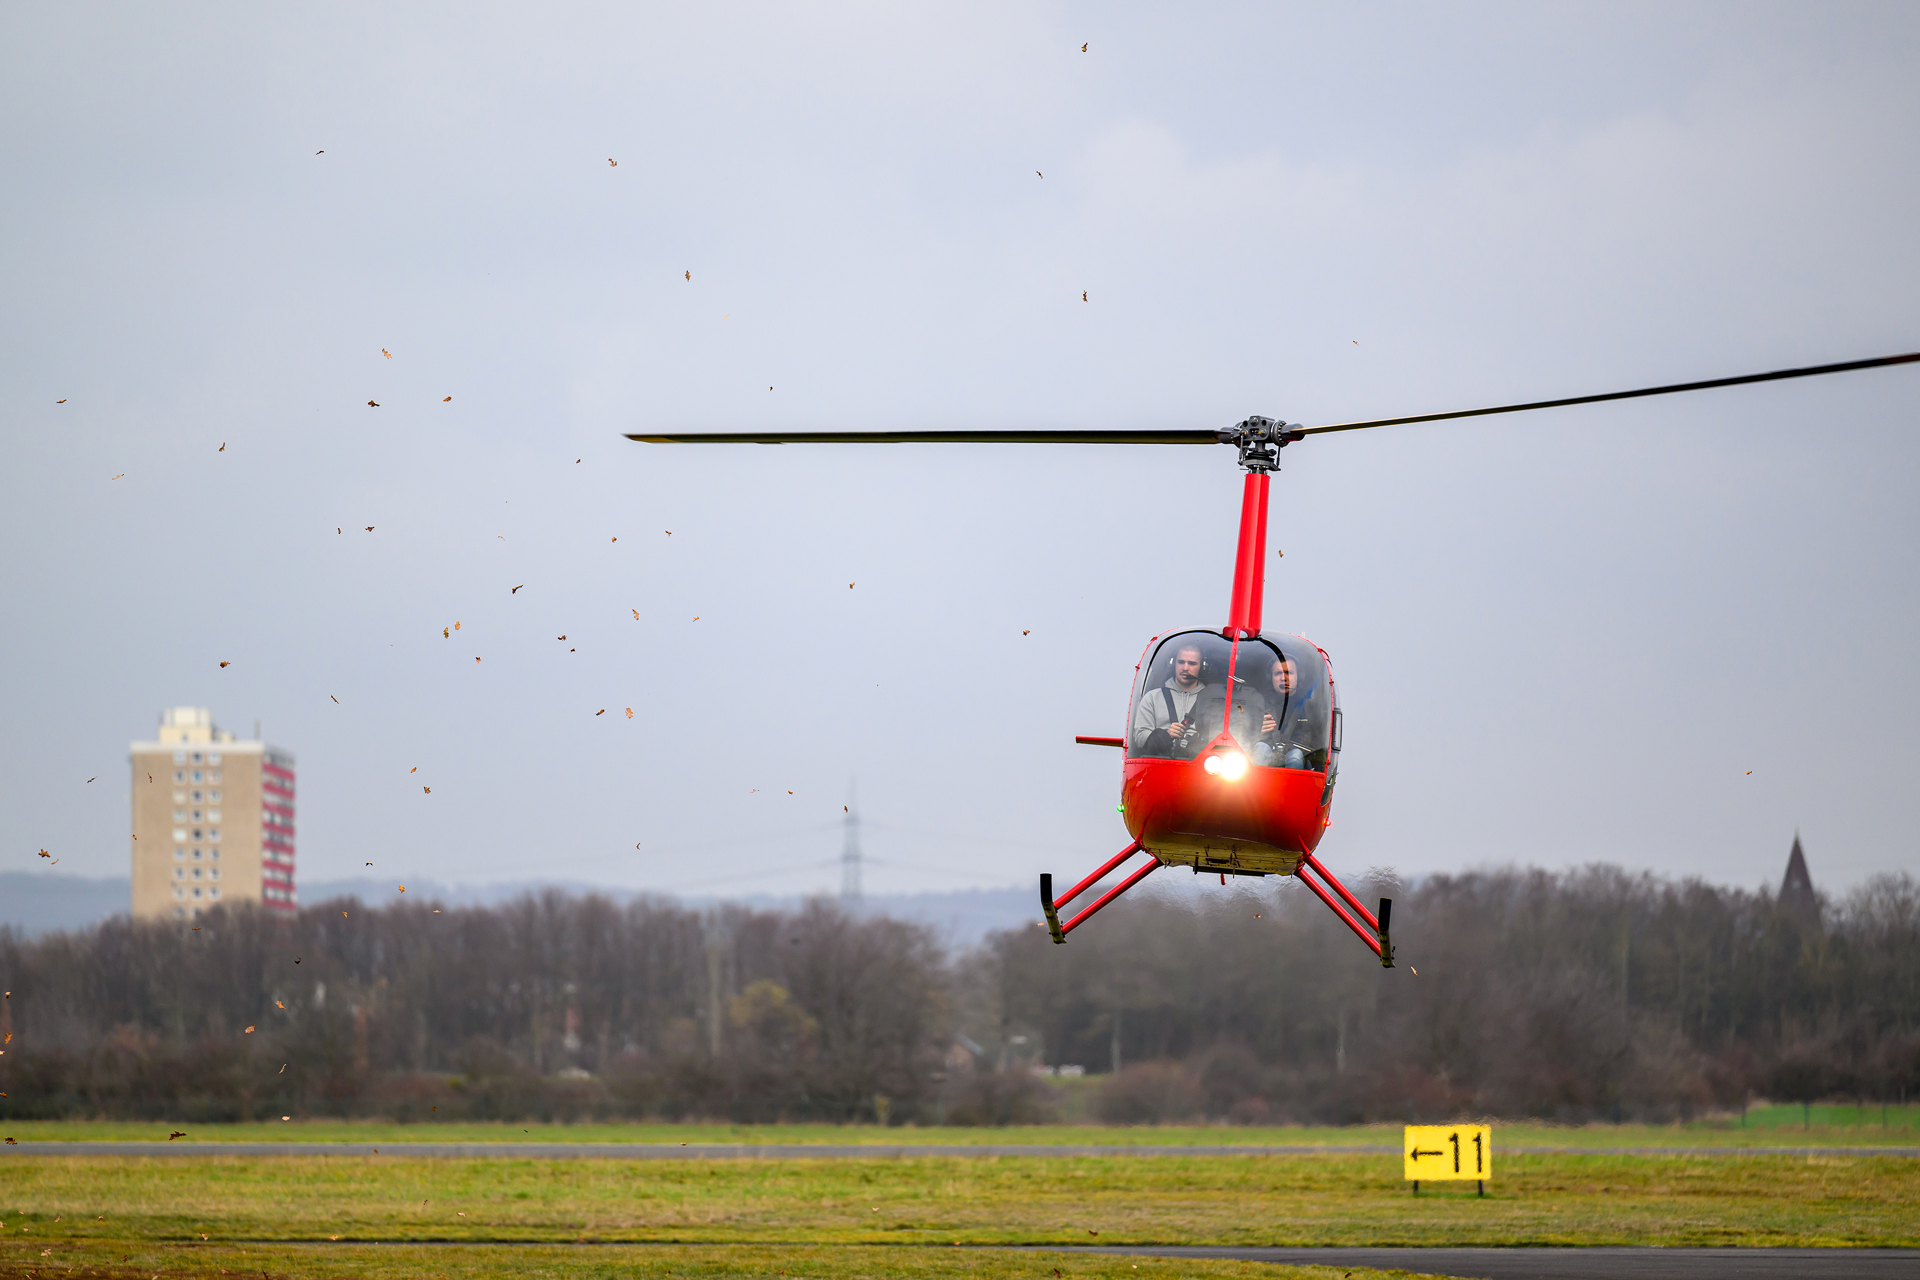 AIR LLOYD - R44 helicopter midair